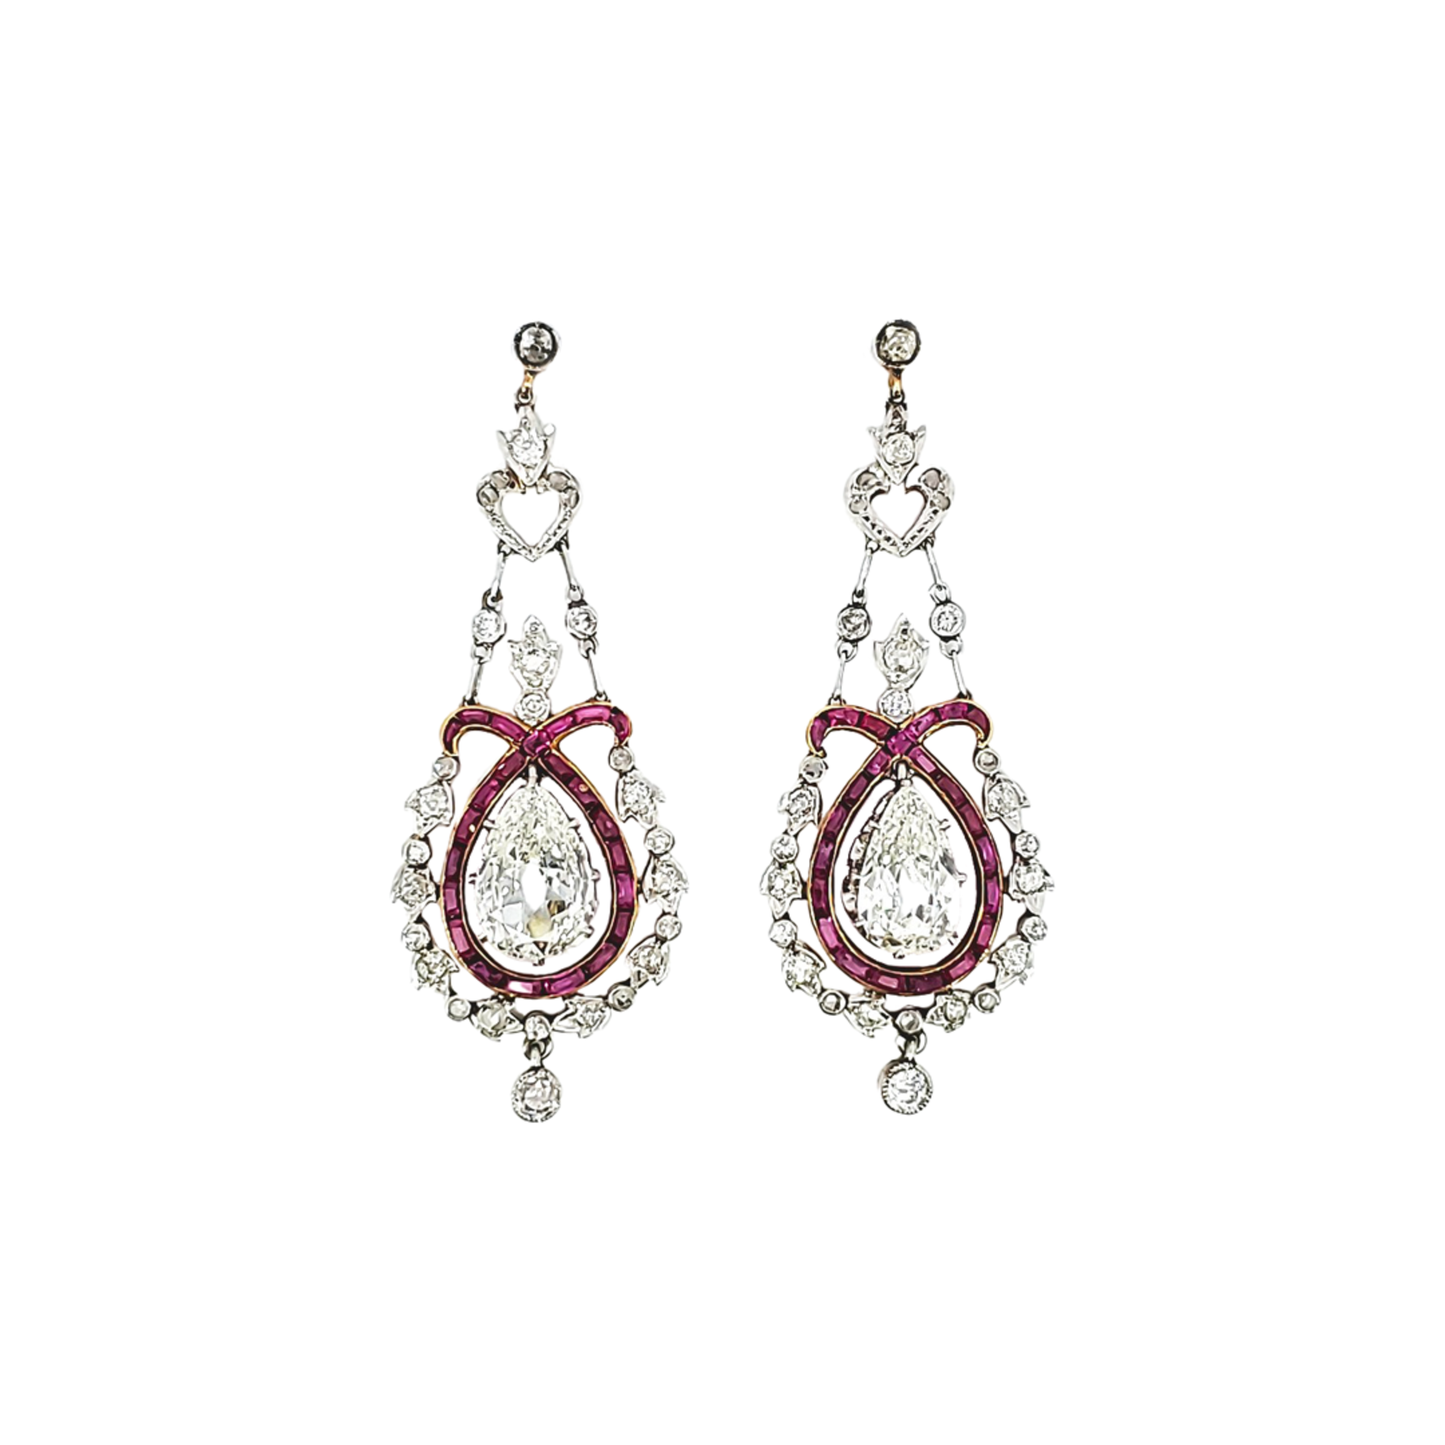 Edwardian Platinum Diamond & Ruby Earrings front